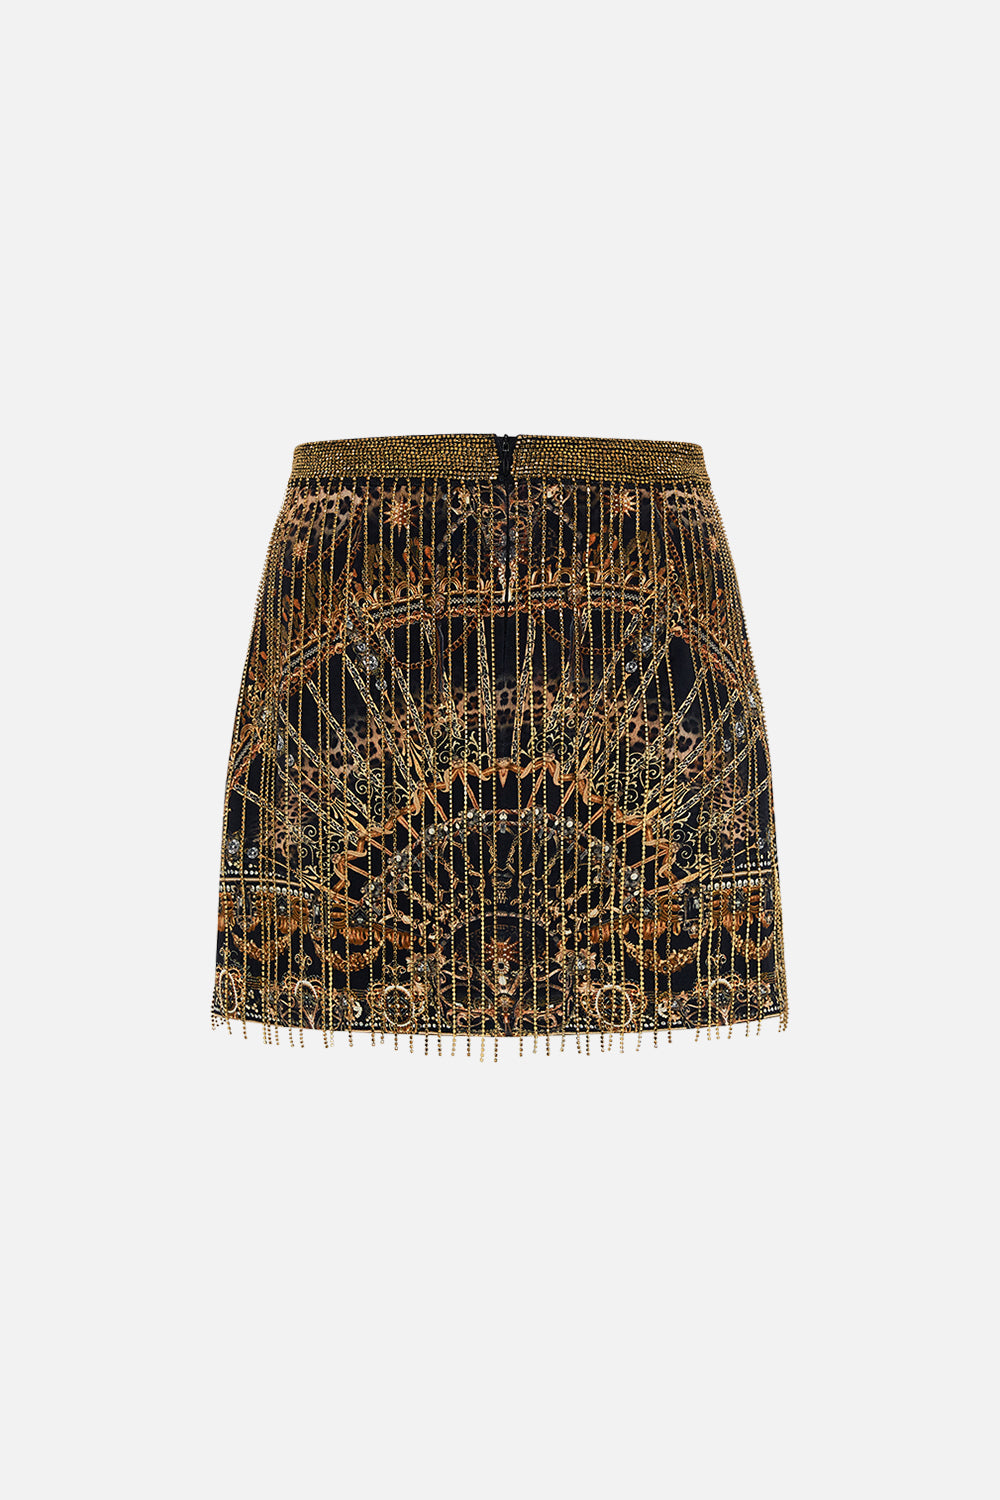 CAMILLA Crystal fringe mini skirt in Masked Moonlight print